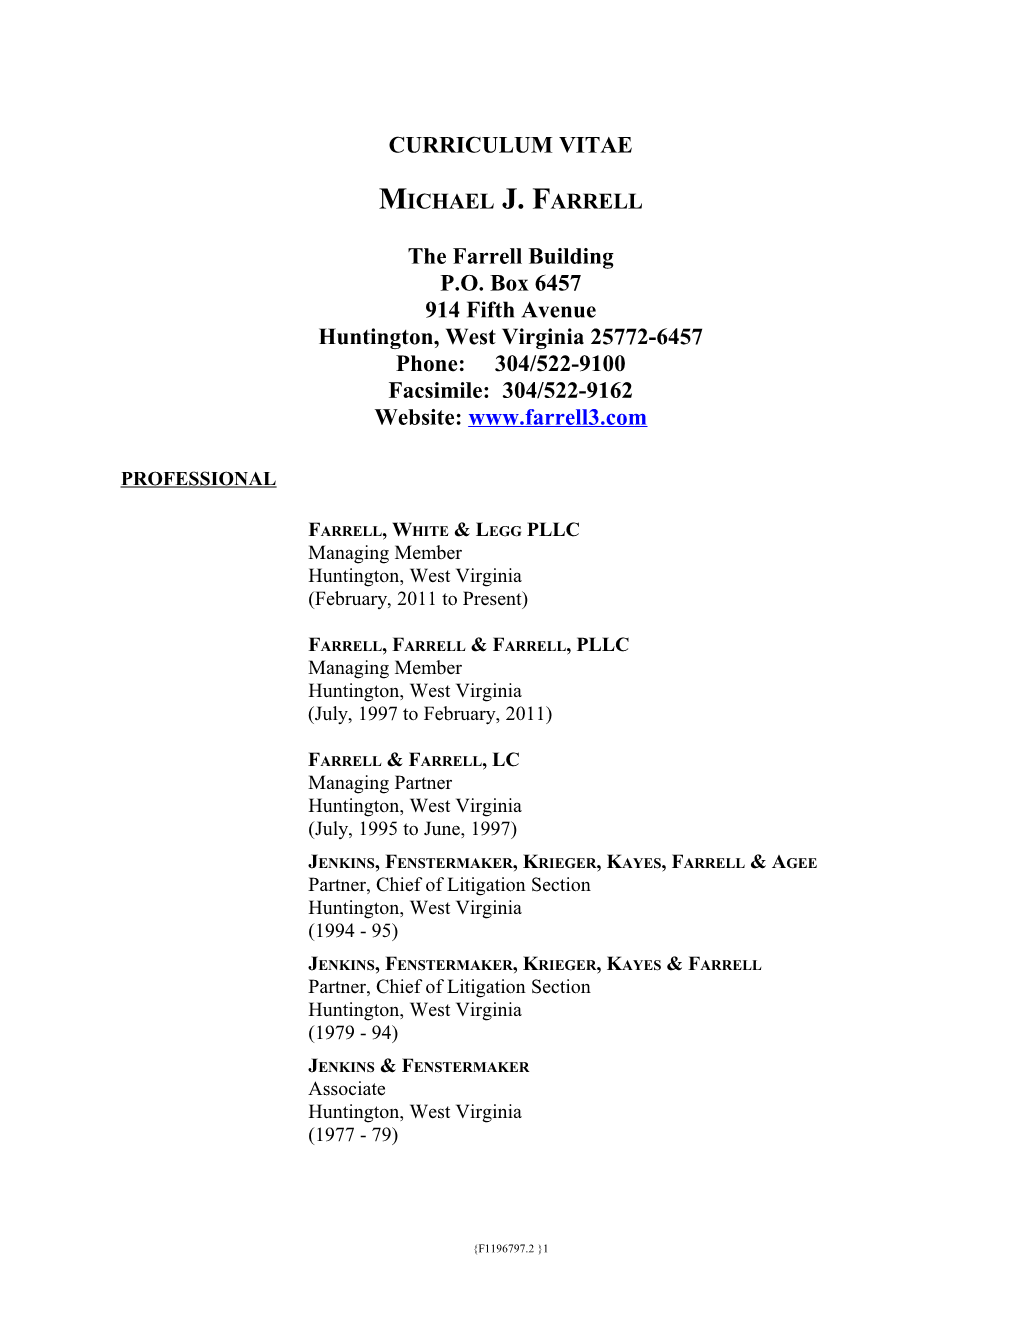 Special Michael J. Farrell Curriculum Vita (0905.0001) (F1196797;2)